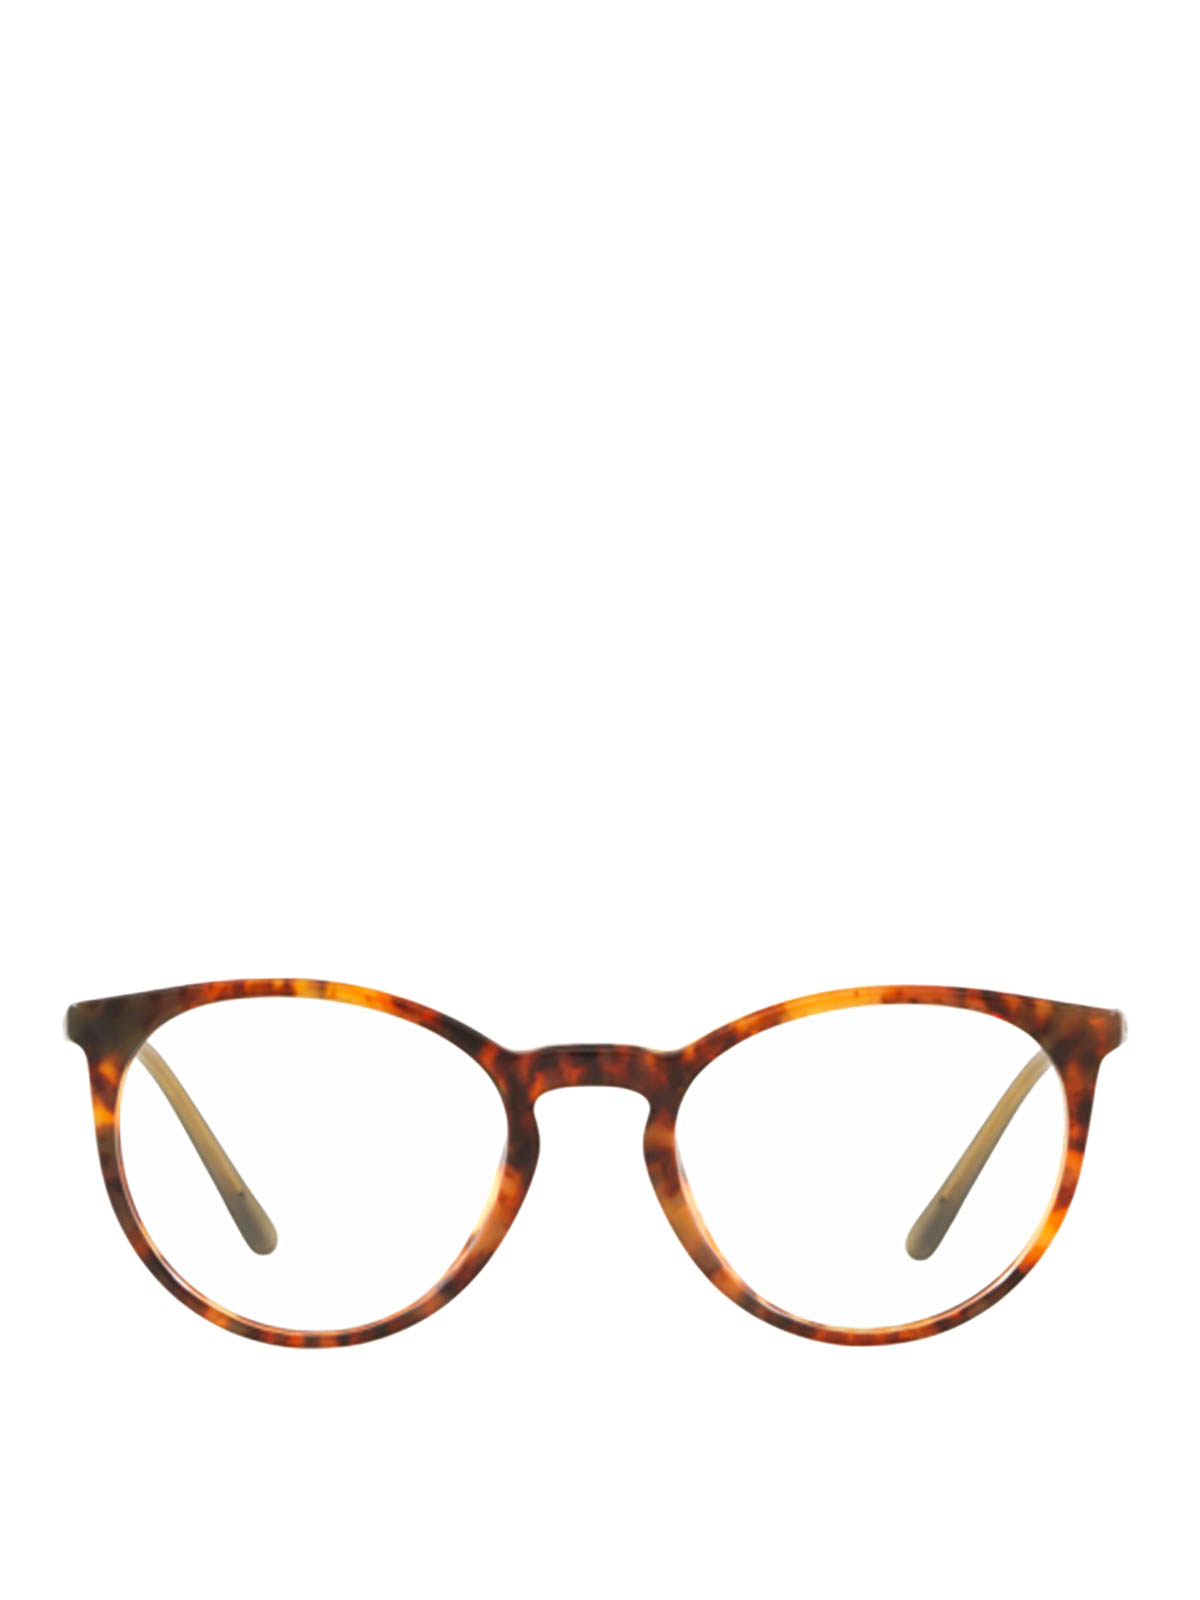 Glasses Polo Ralph Lauren - Tortoiseshell optical glasses - PH21935017